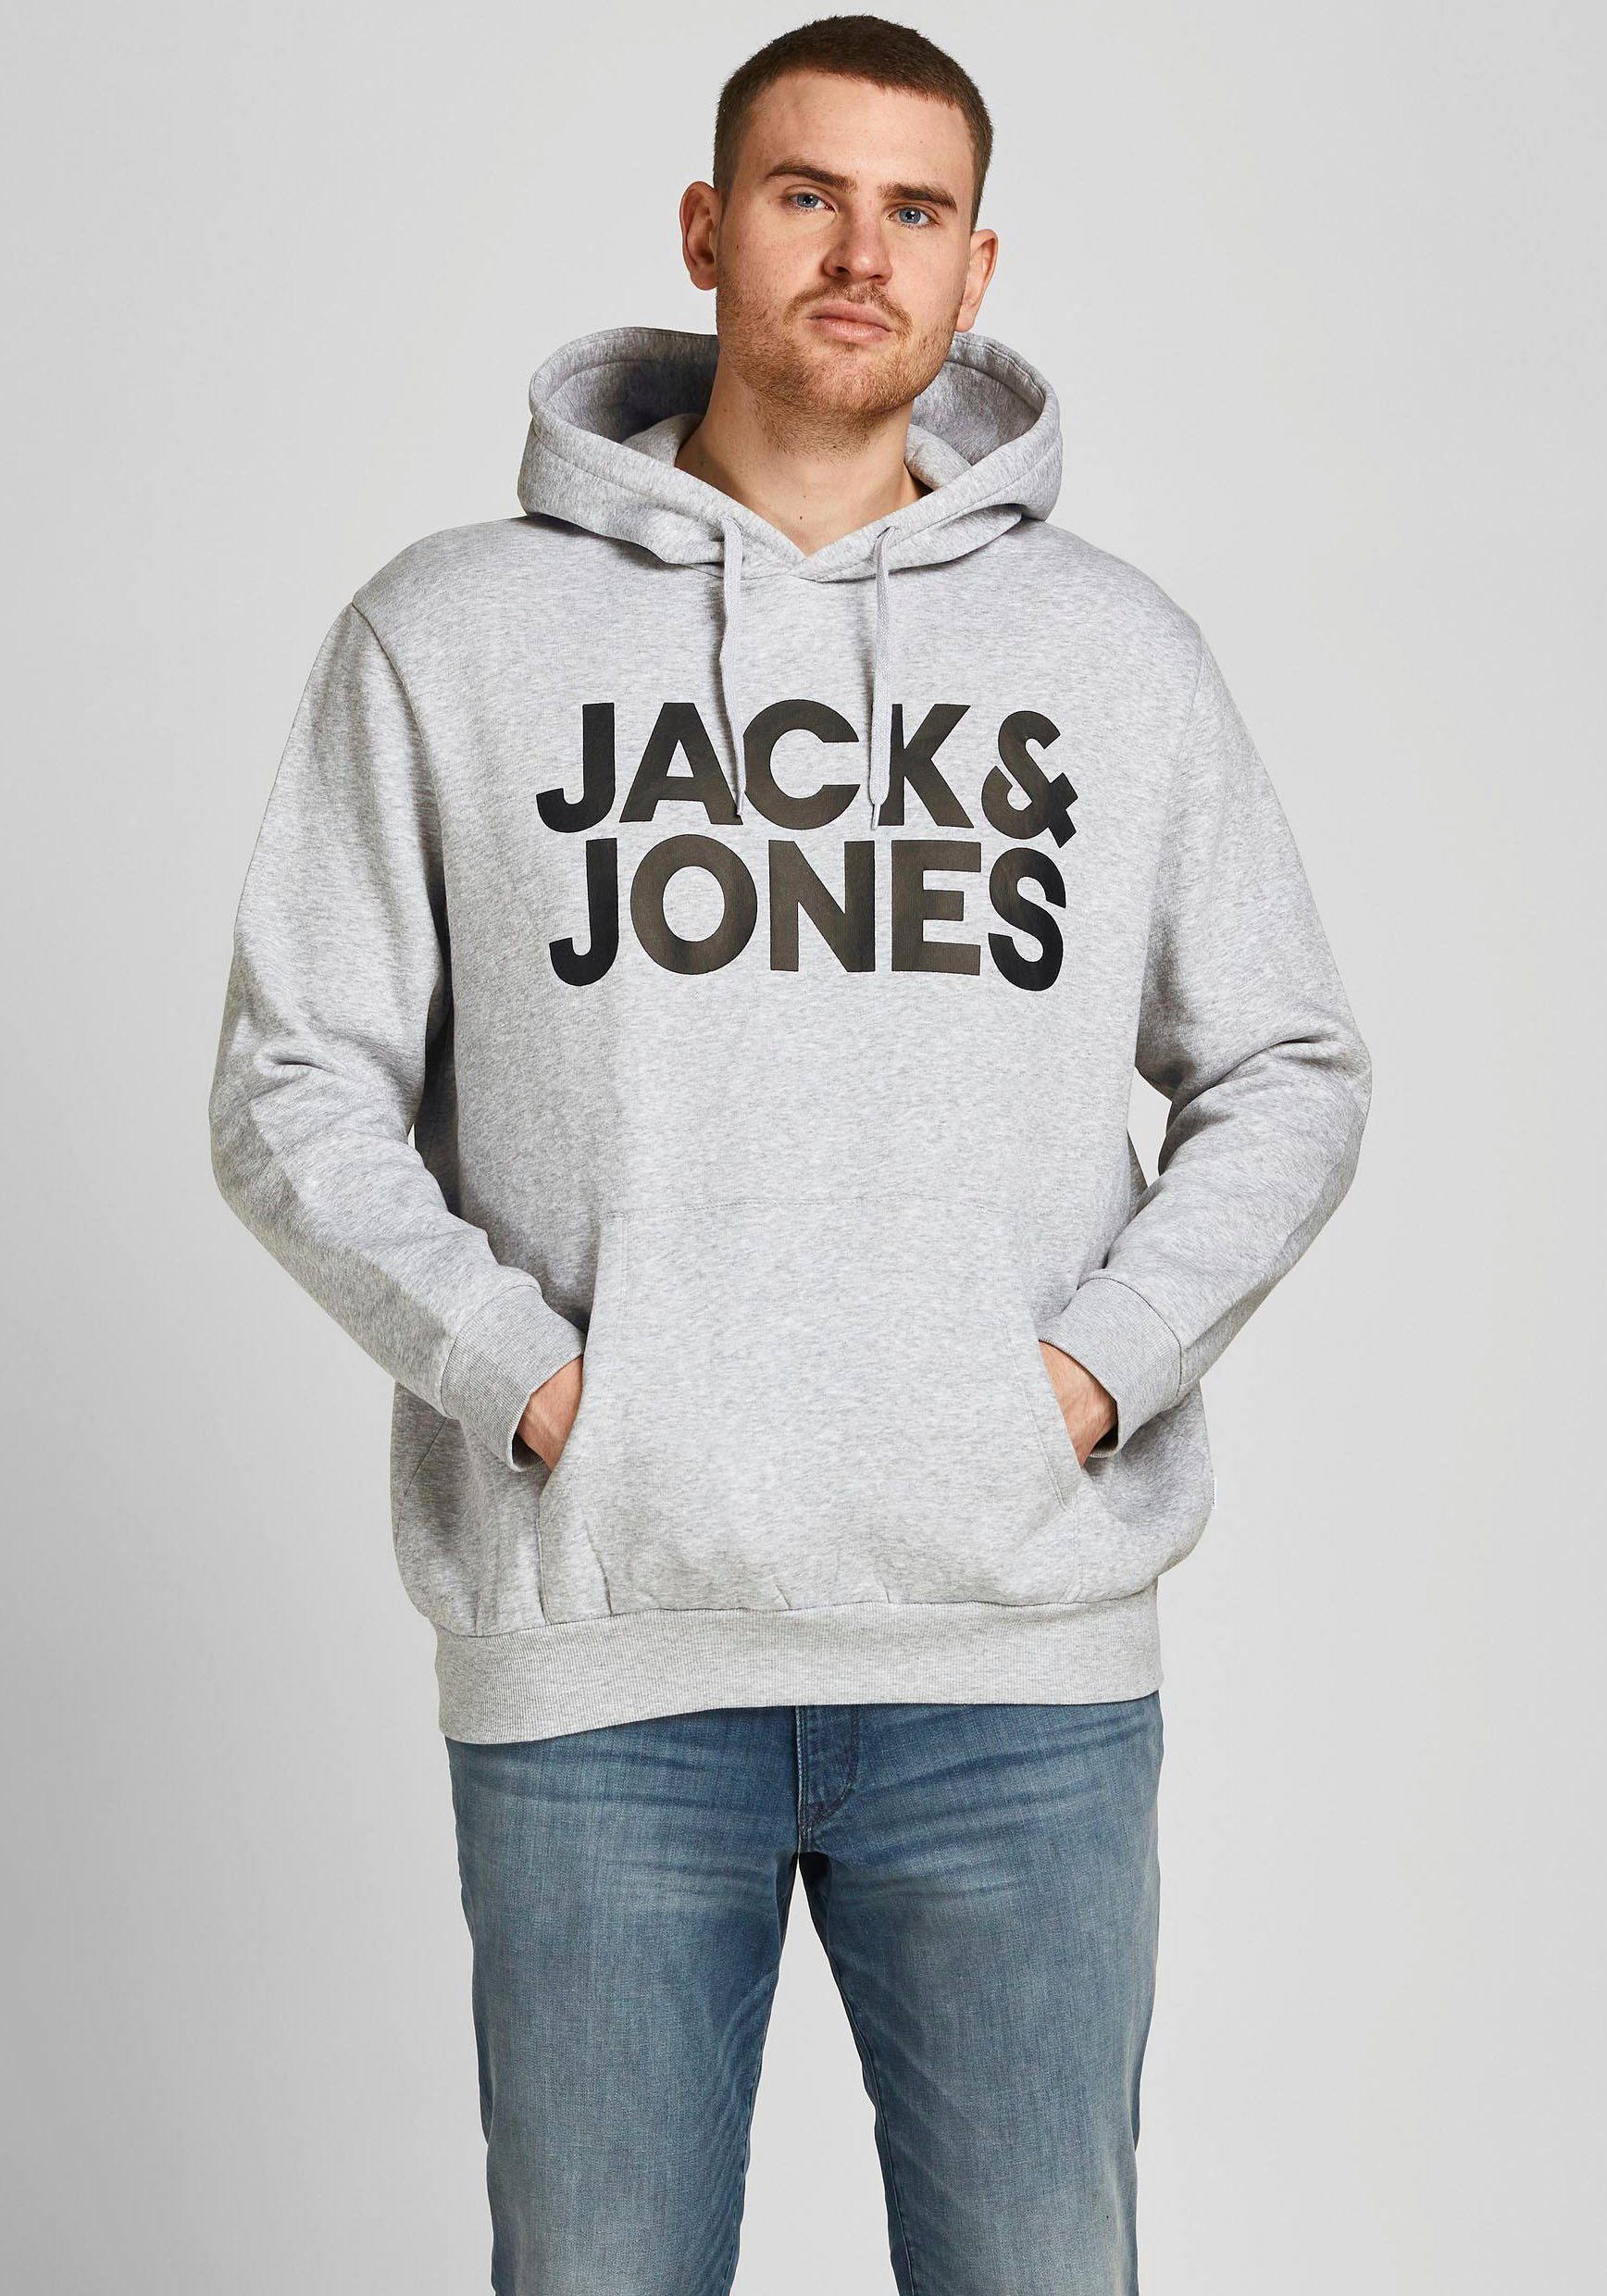 & SWEAT CORP HOOD hellgrau-meliert Kapuzensweatshirt PlusSize LOGO Bis Jack 6XL Jones Größe